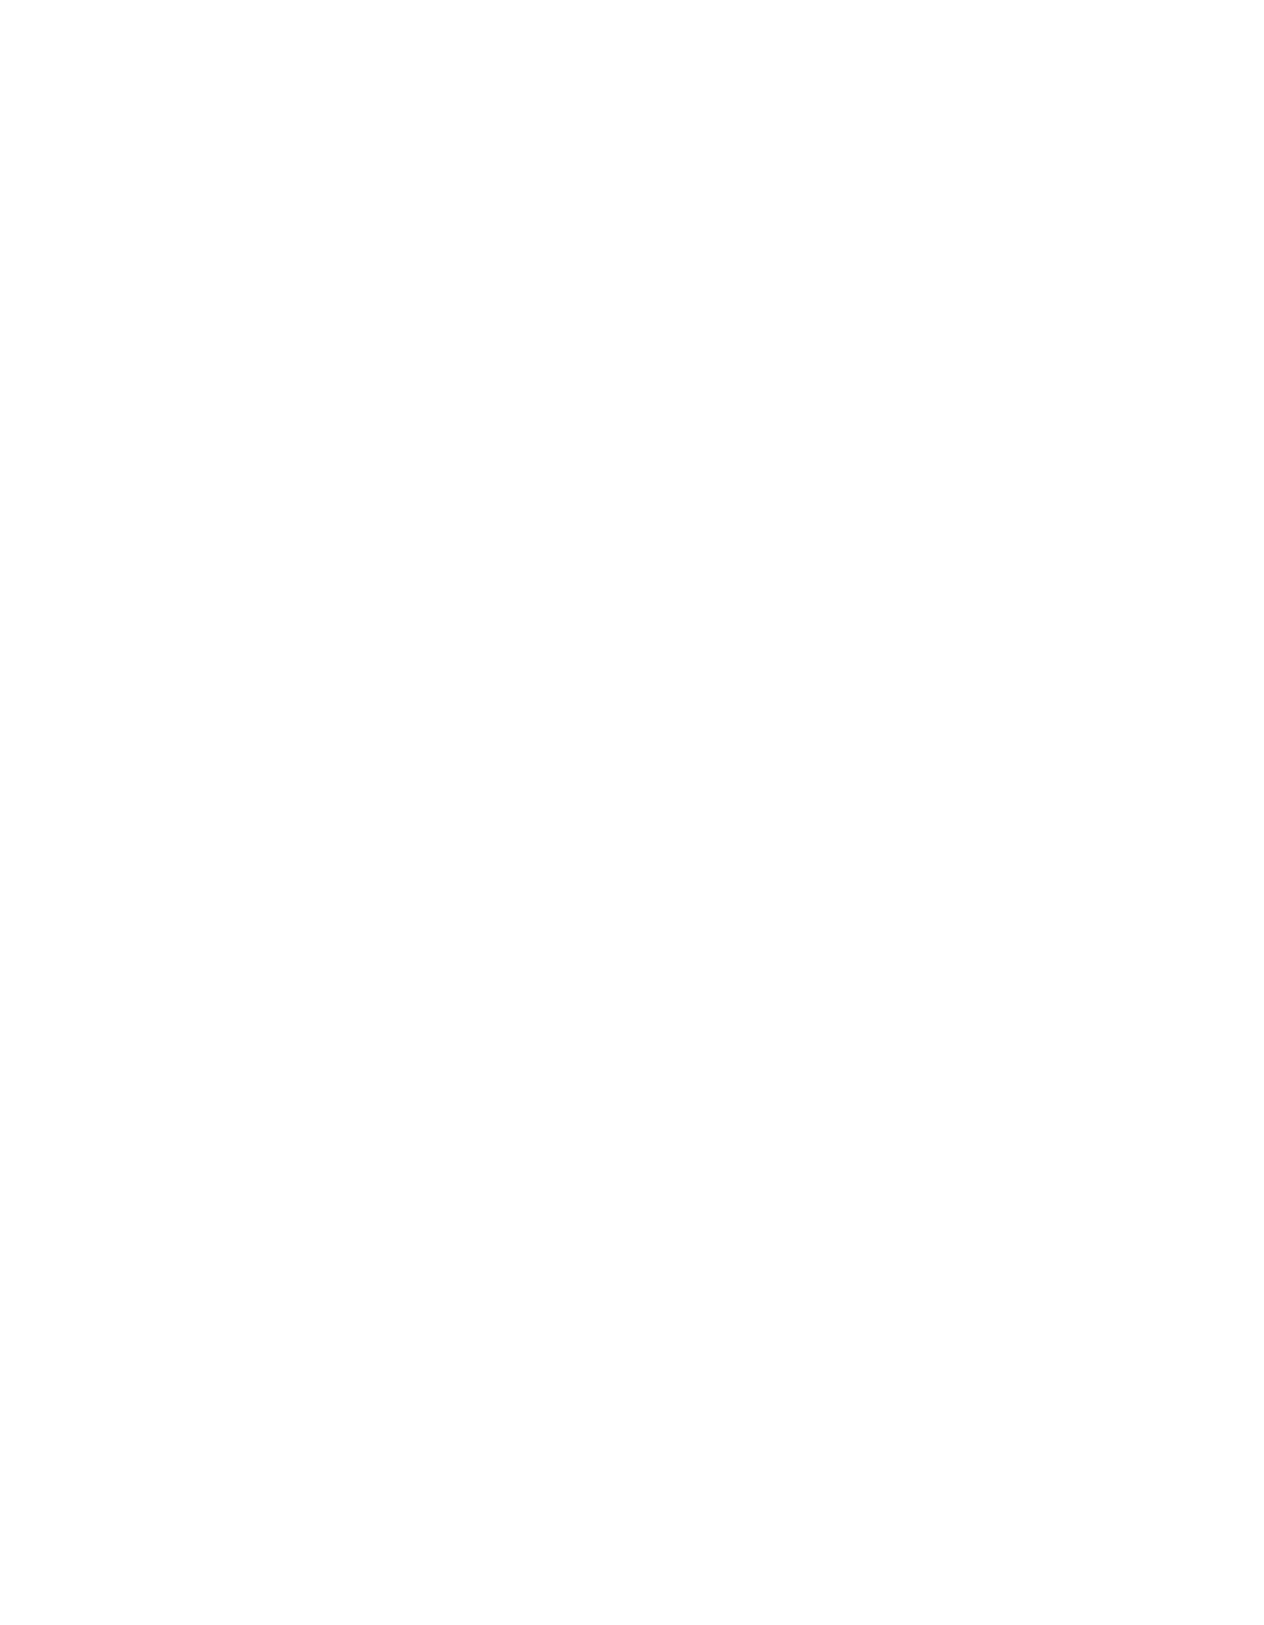 Cosan logo for dark backgrounds (transparent PNG)